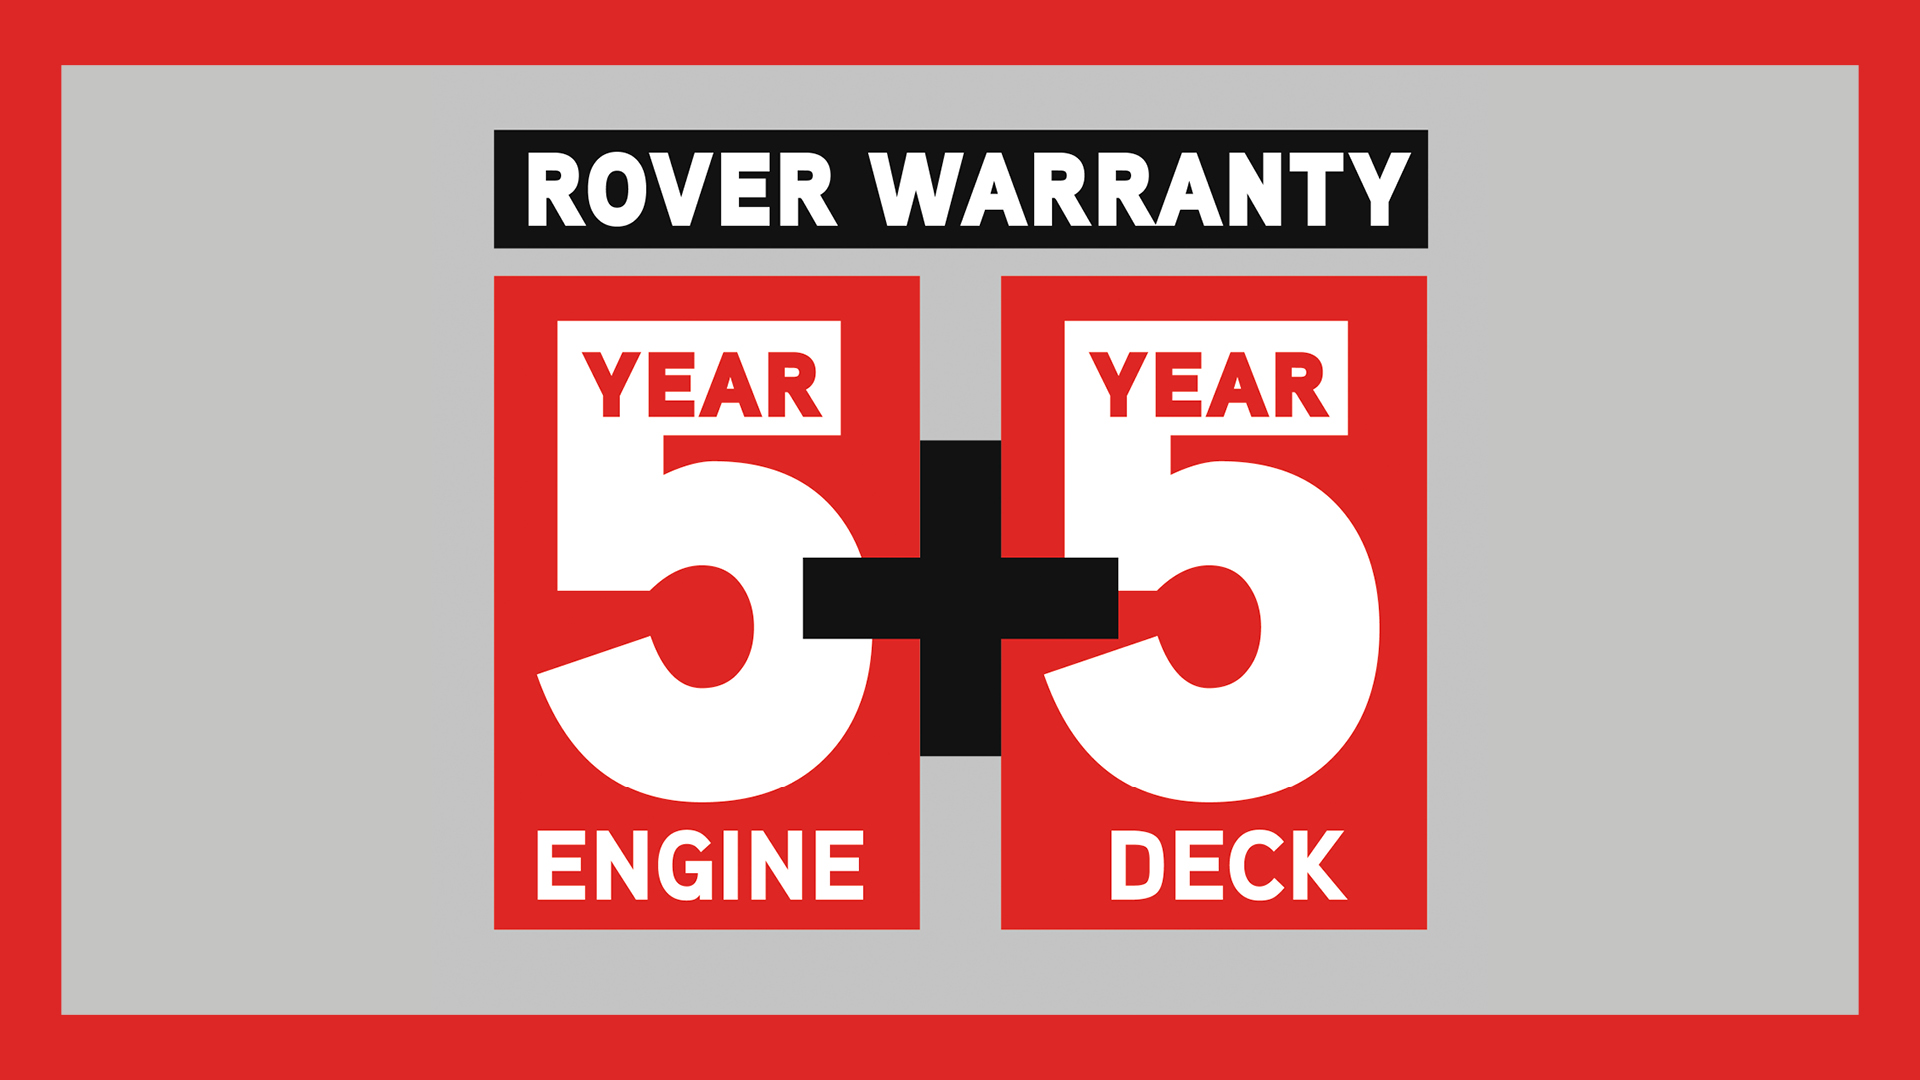 Rover 5 Year Warranty